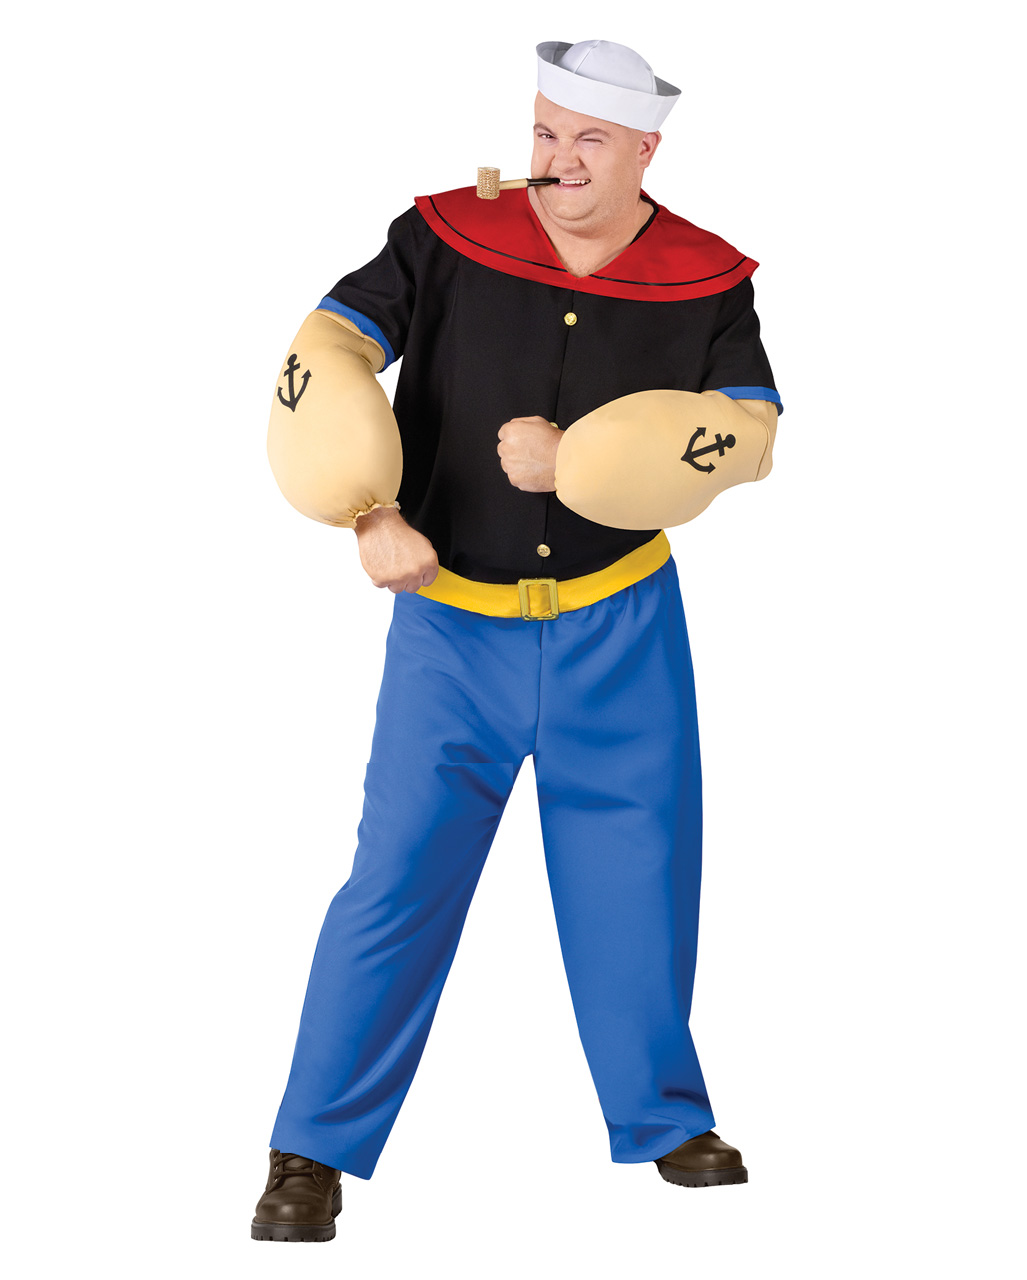 Plus　Original　Popeye　to　Costume　Size　order